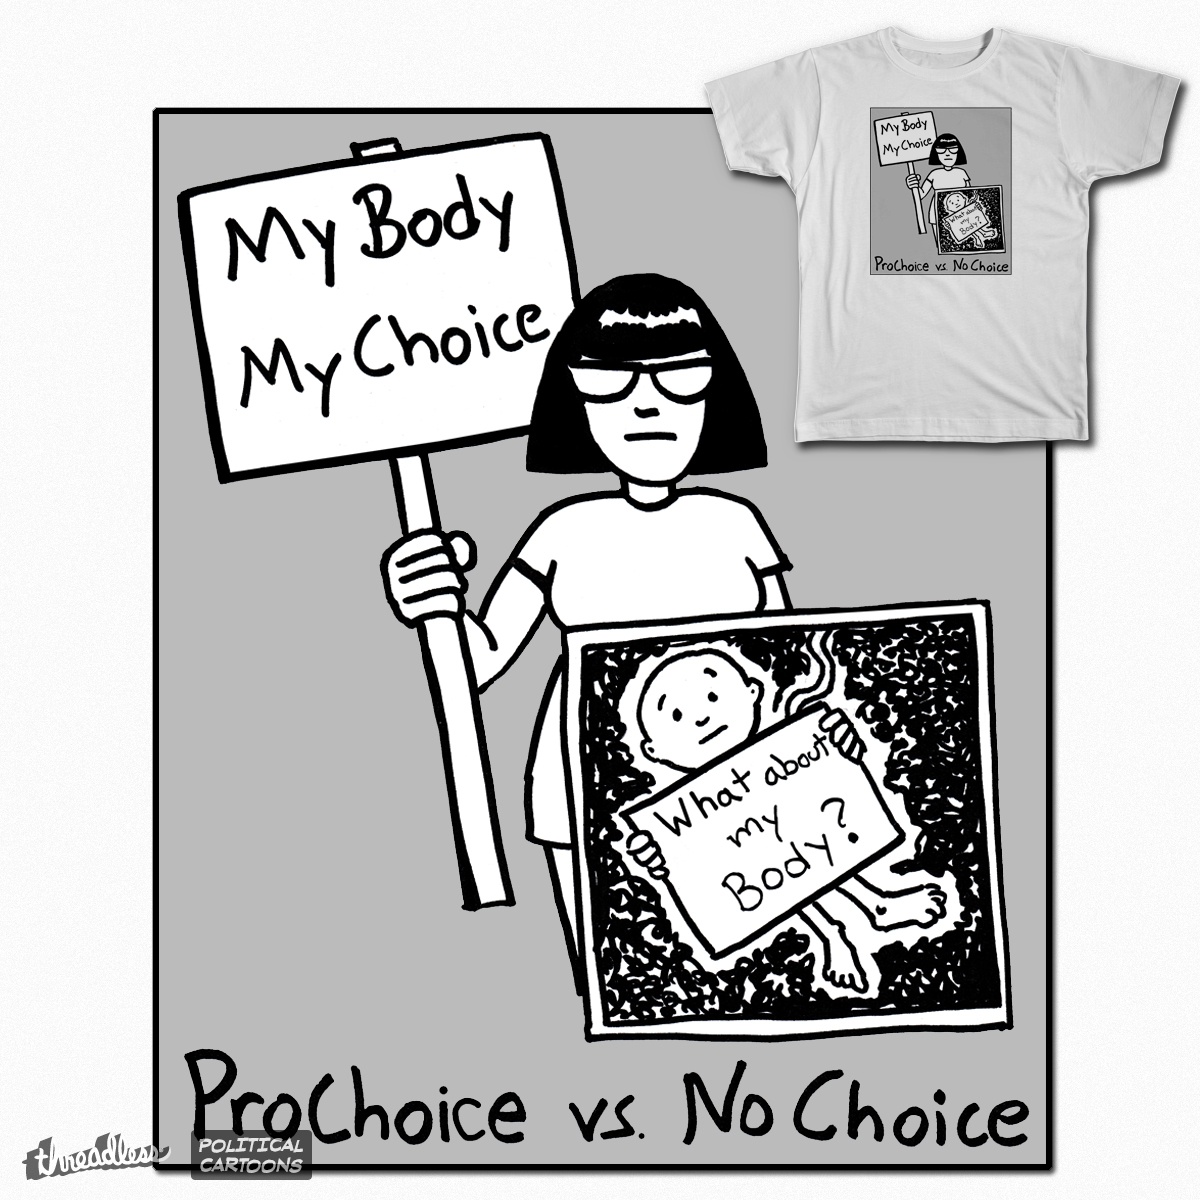 No Choice, a cool t-shirt design